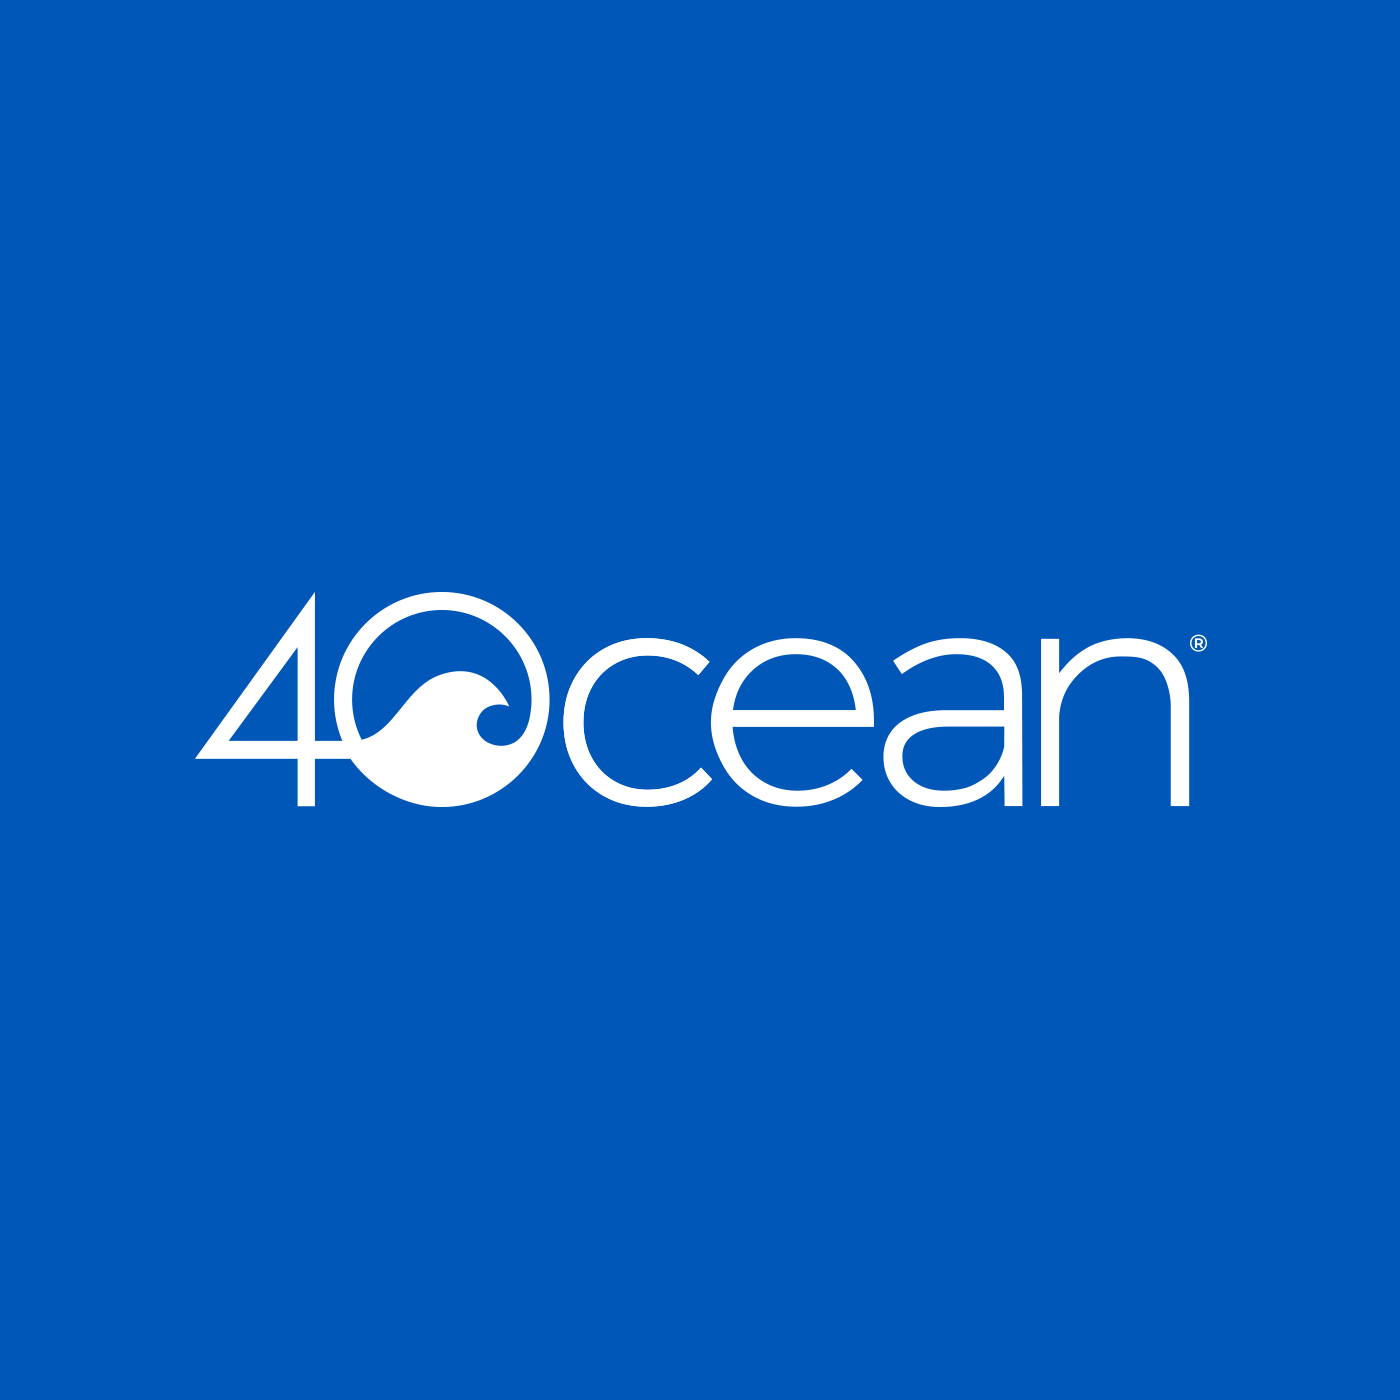 4Ocean Overfishing / Sustainable fishing Red Bracelet | YesWellness.com